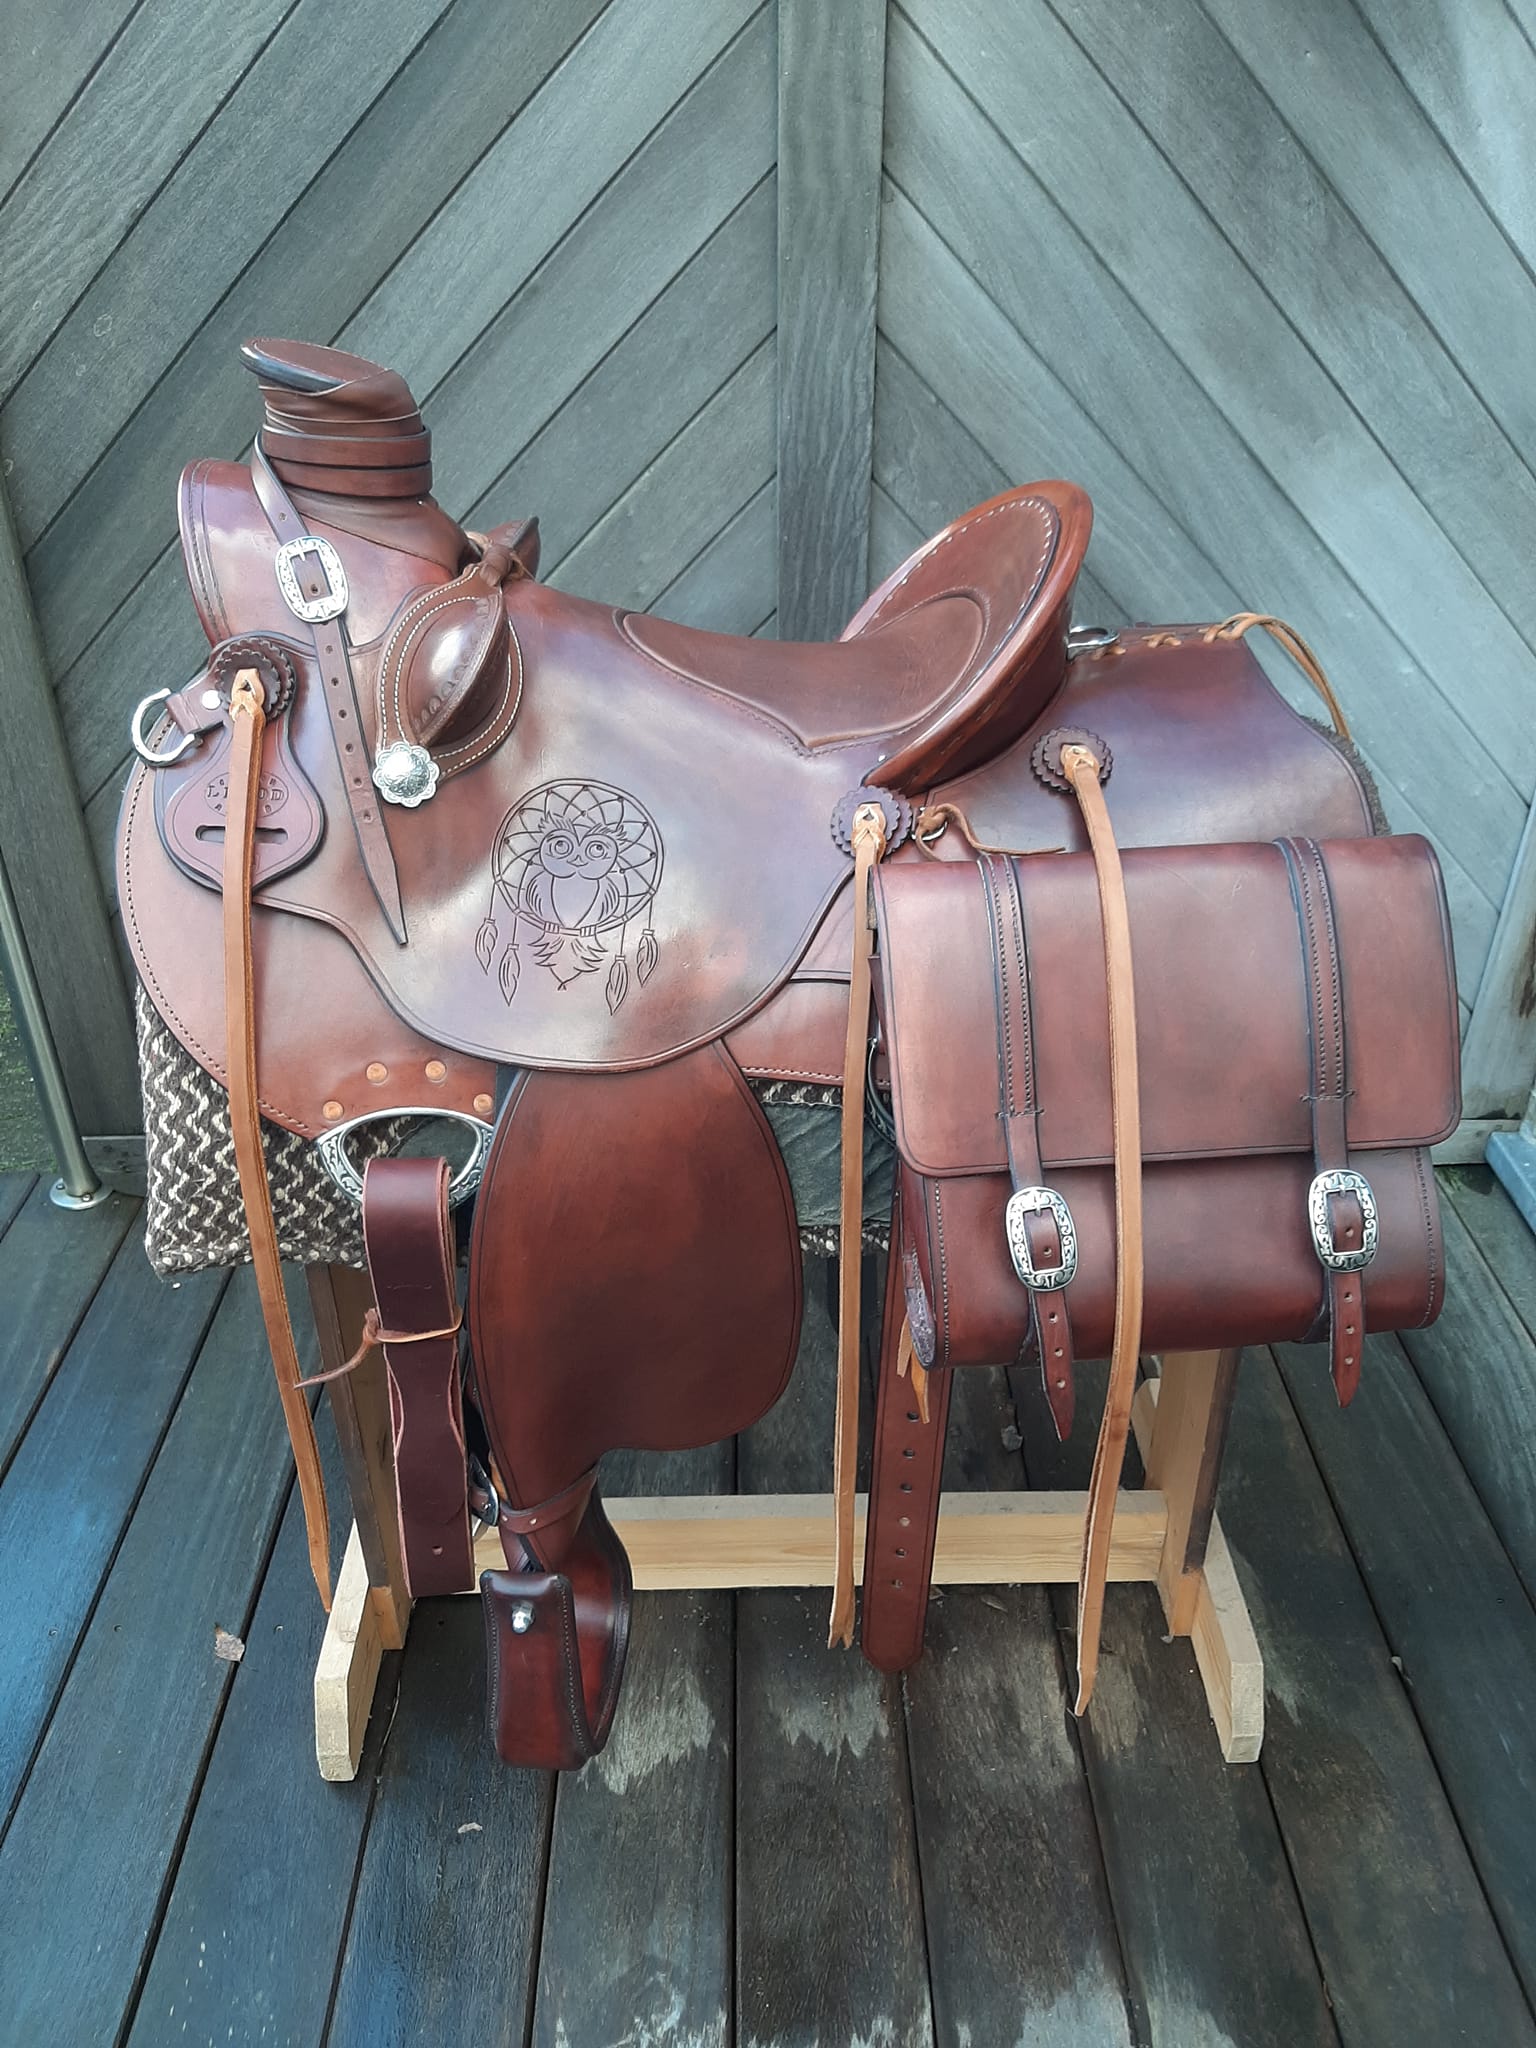 Hulara Selle de cheval Western Tooled en cuir véritable sculpté